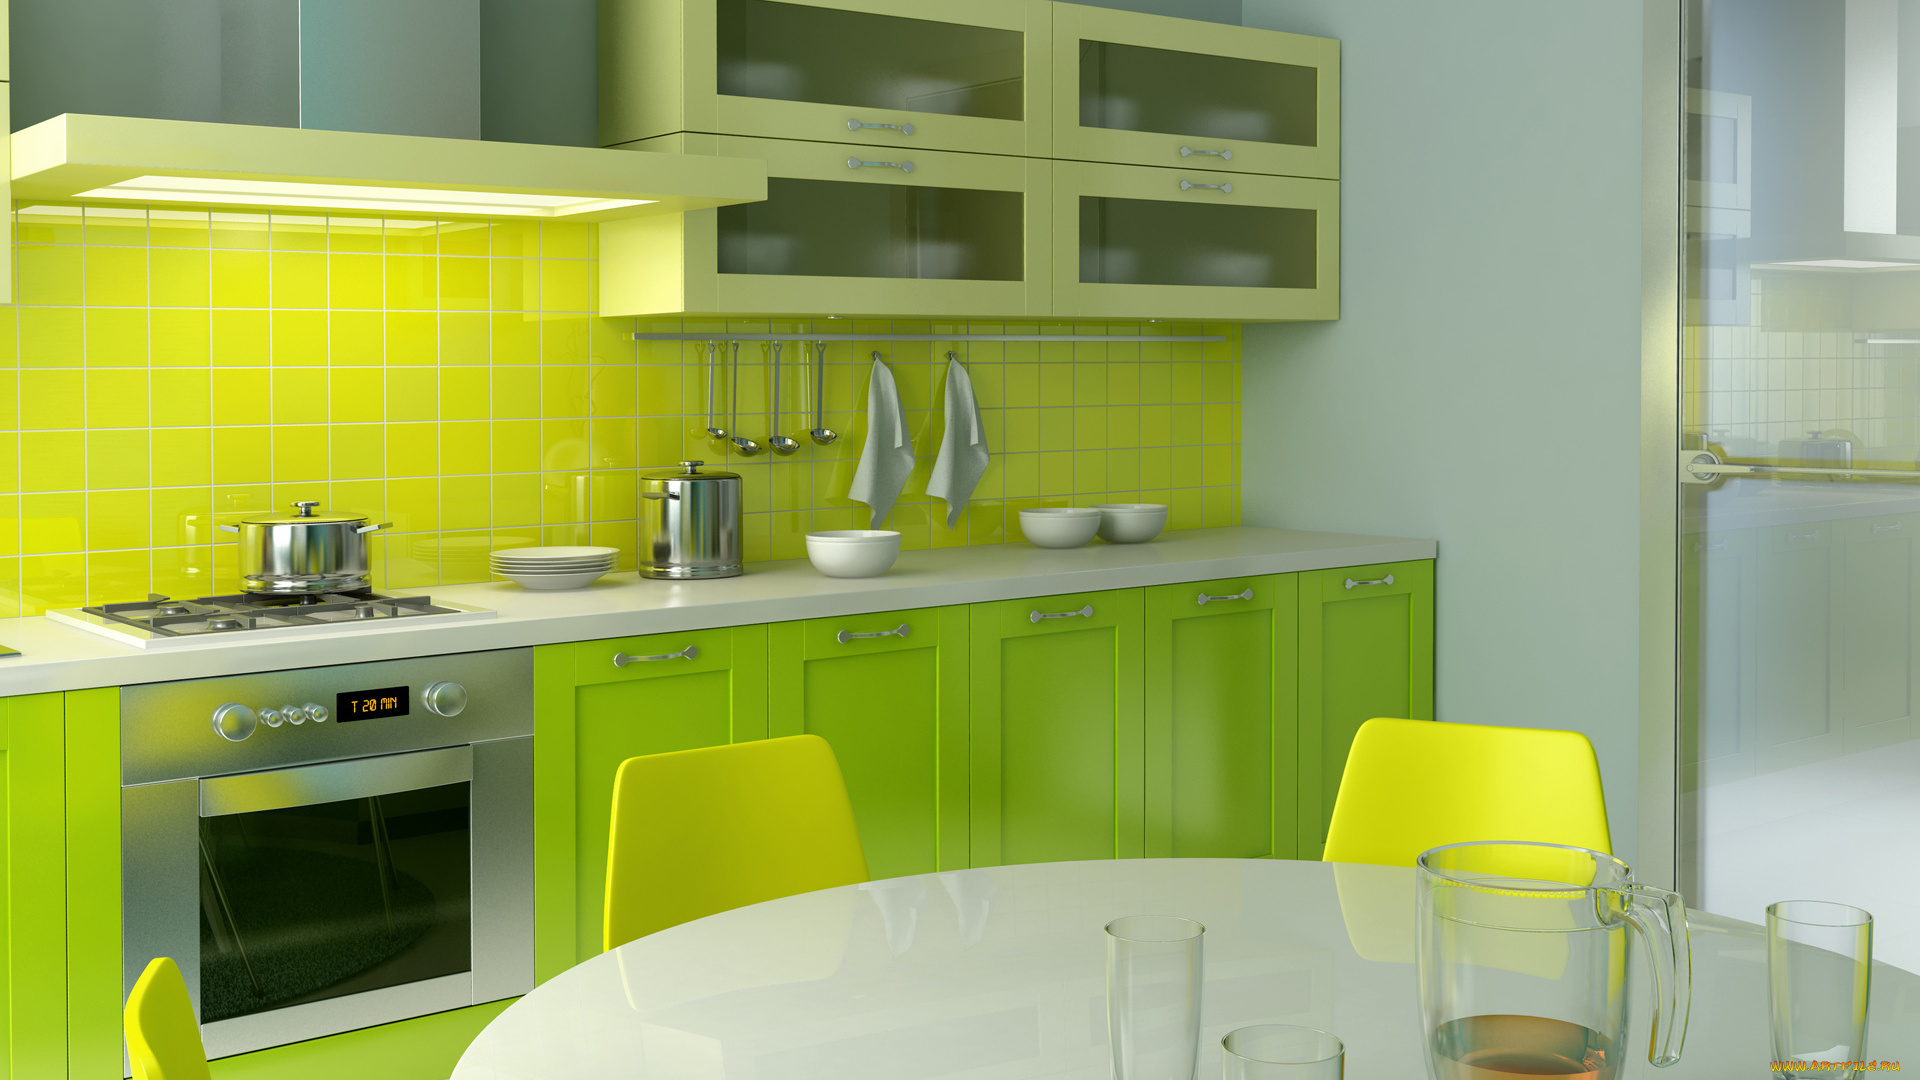 3д, графика, realism, реализм, яркий, интерьер, комната, дизайн, стиль, кухня, зеленый, желтый, стол, стулья